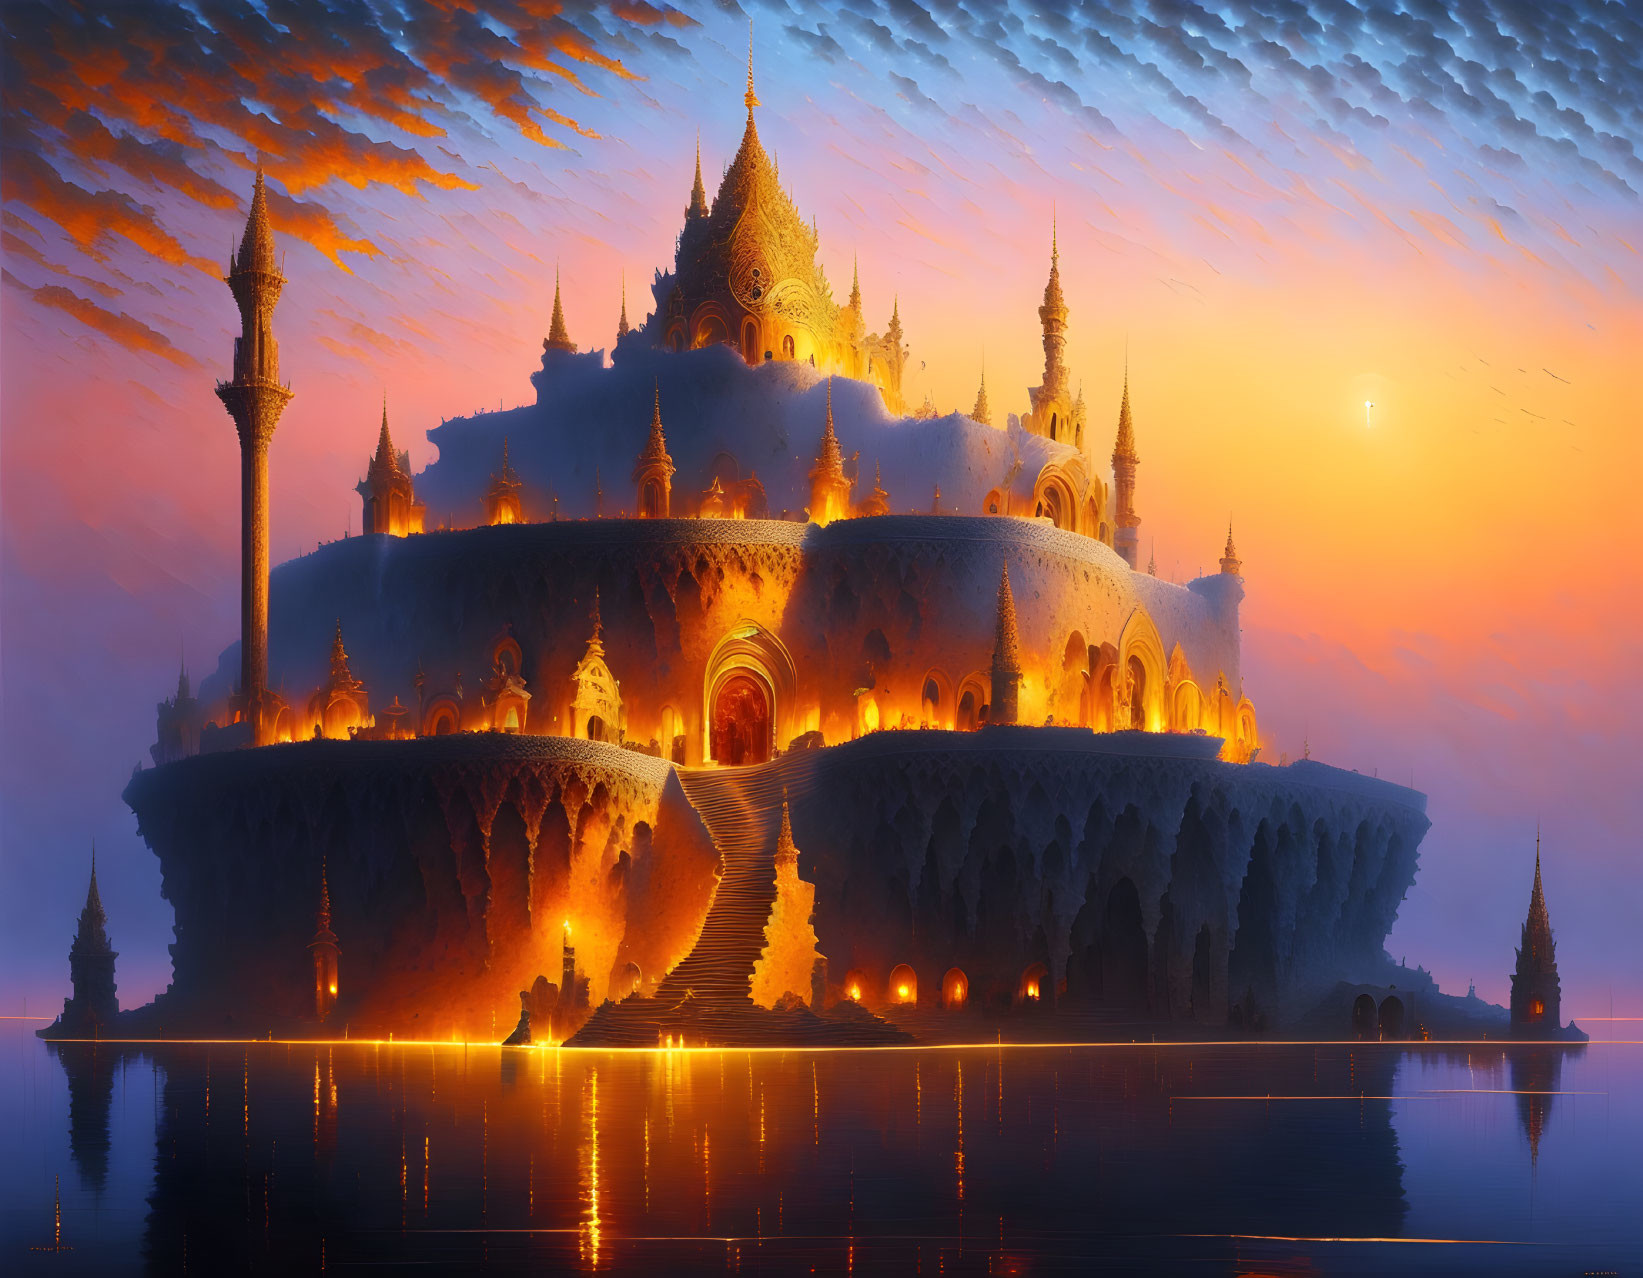 Ethereal illuminated fantasy castle on reflective water at sunset.